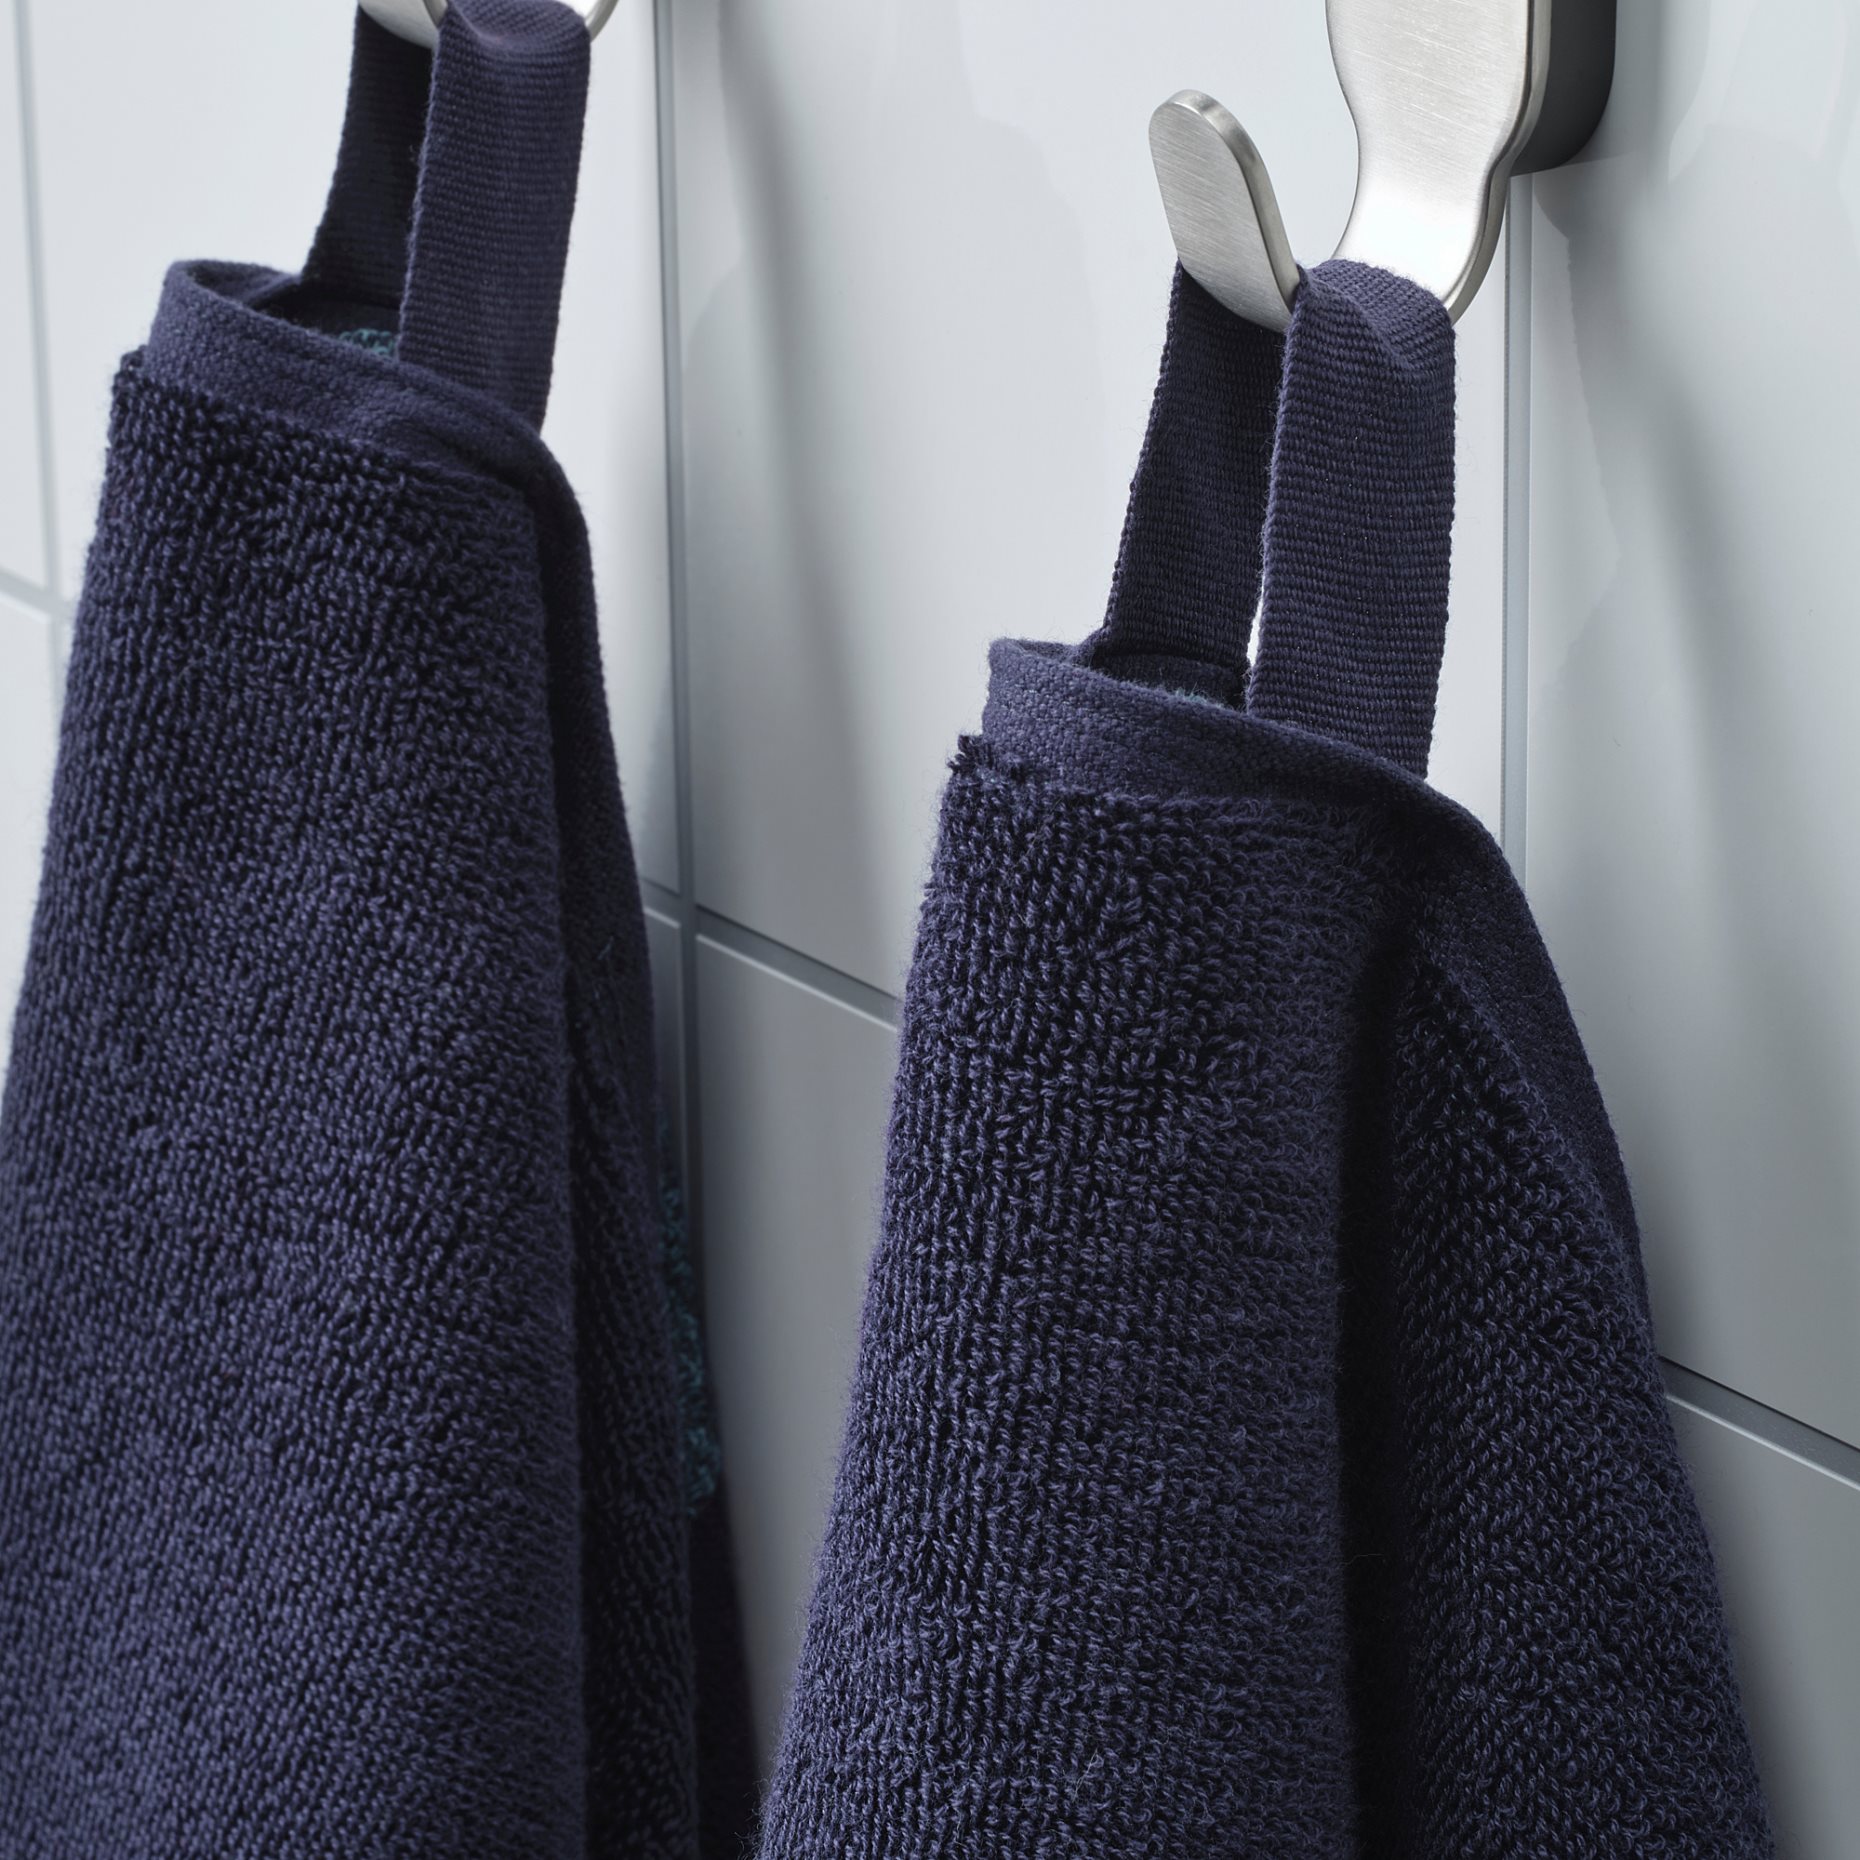 HIMLEÅN, hand towel, 404.429.11